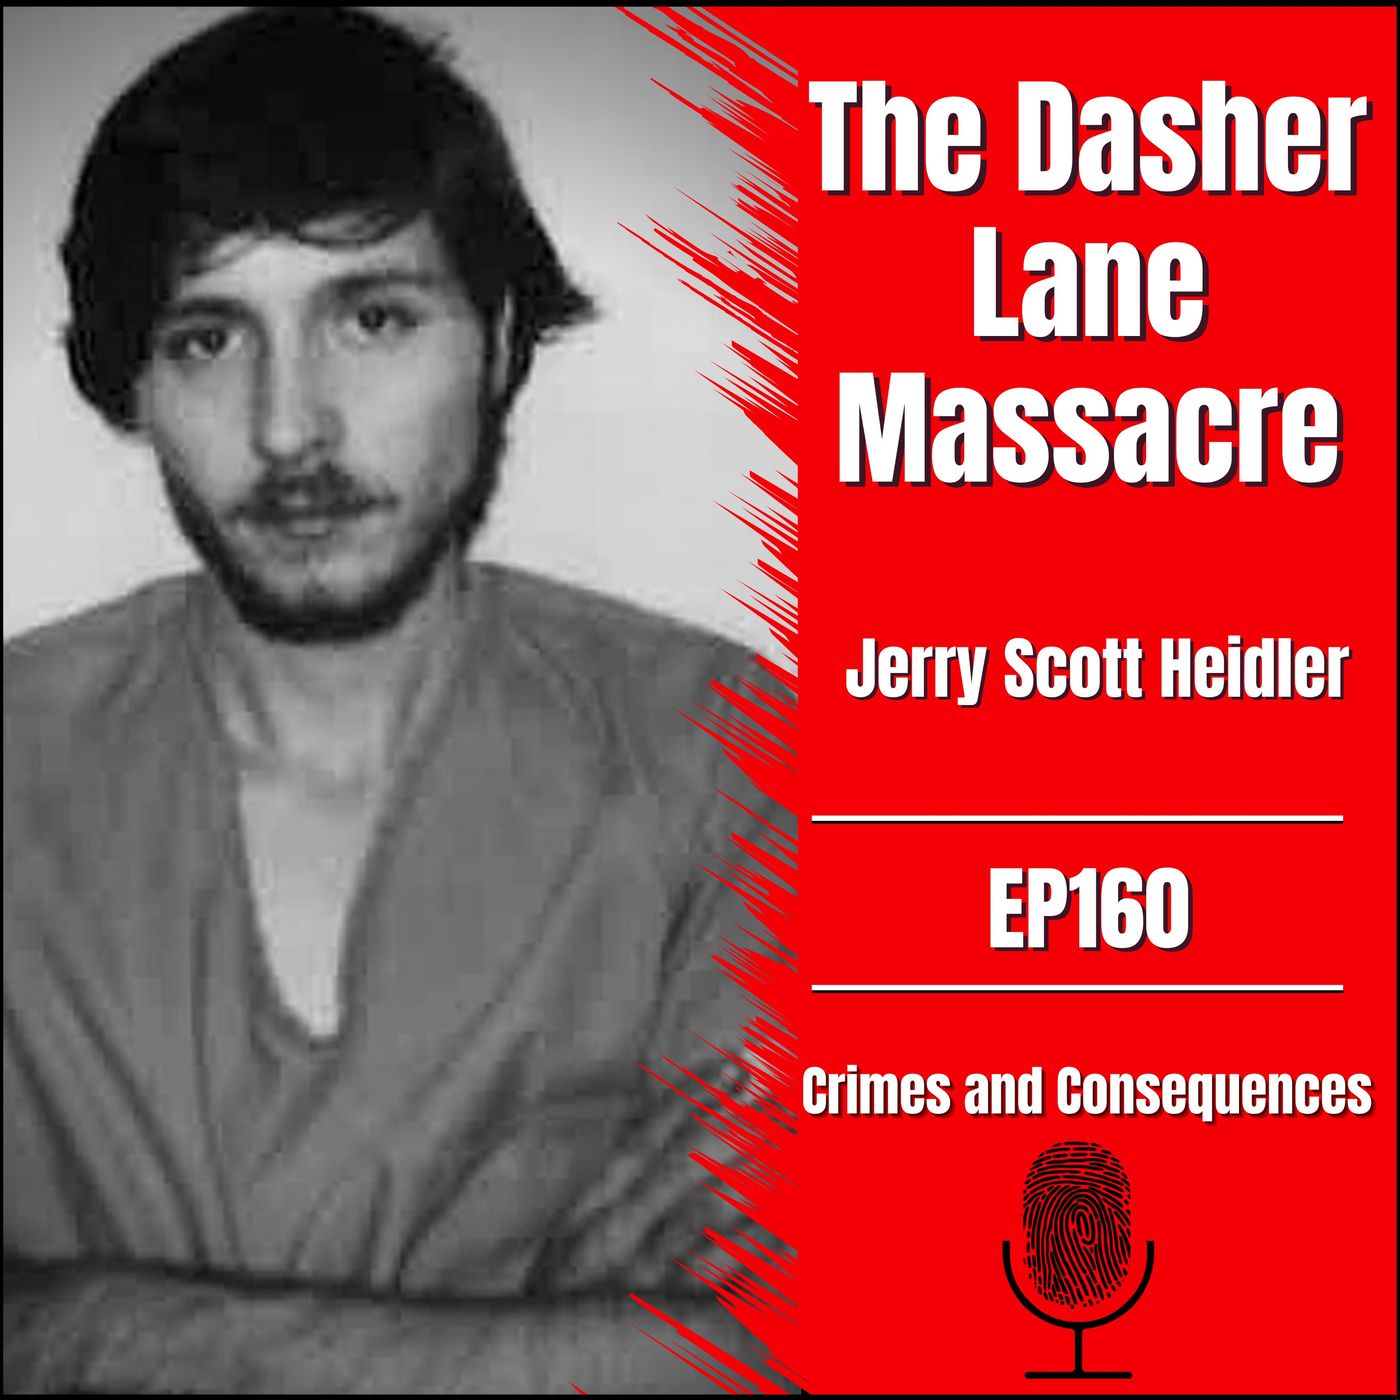 EP160: THE DASHER LANE MASSACRE